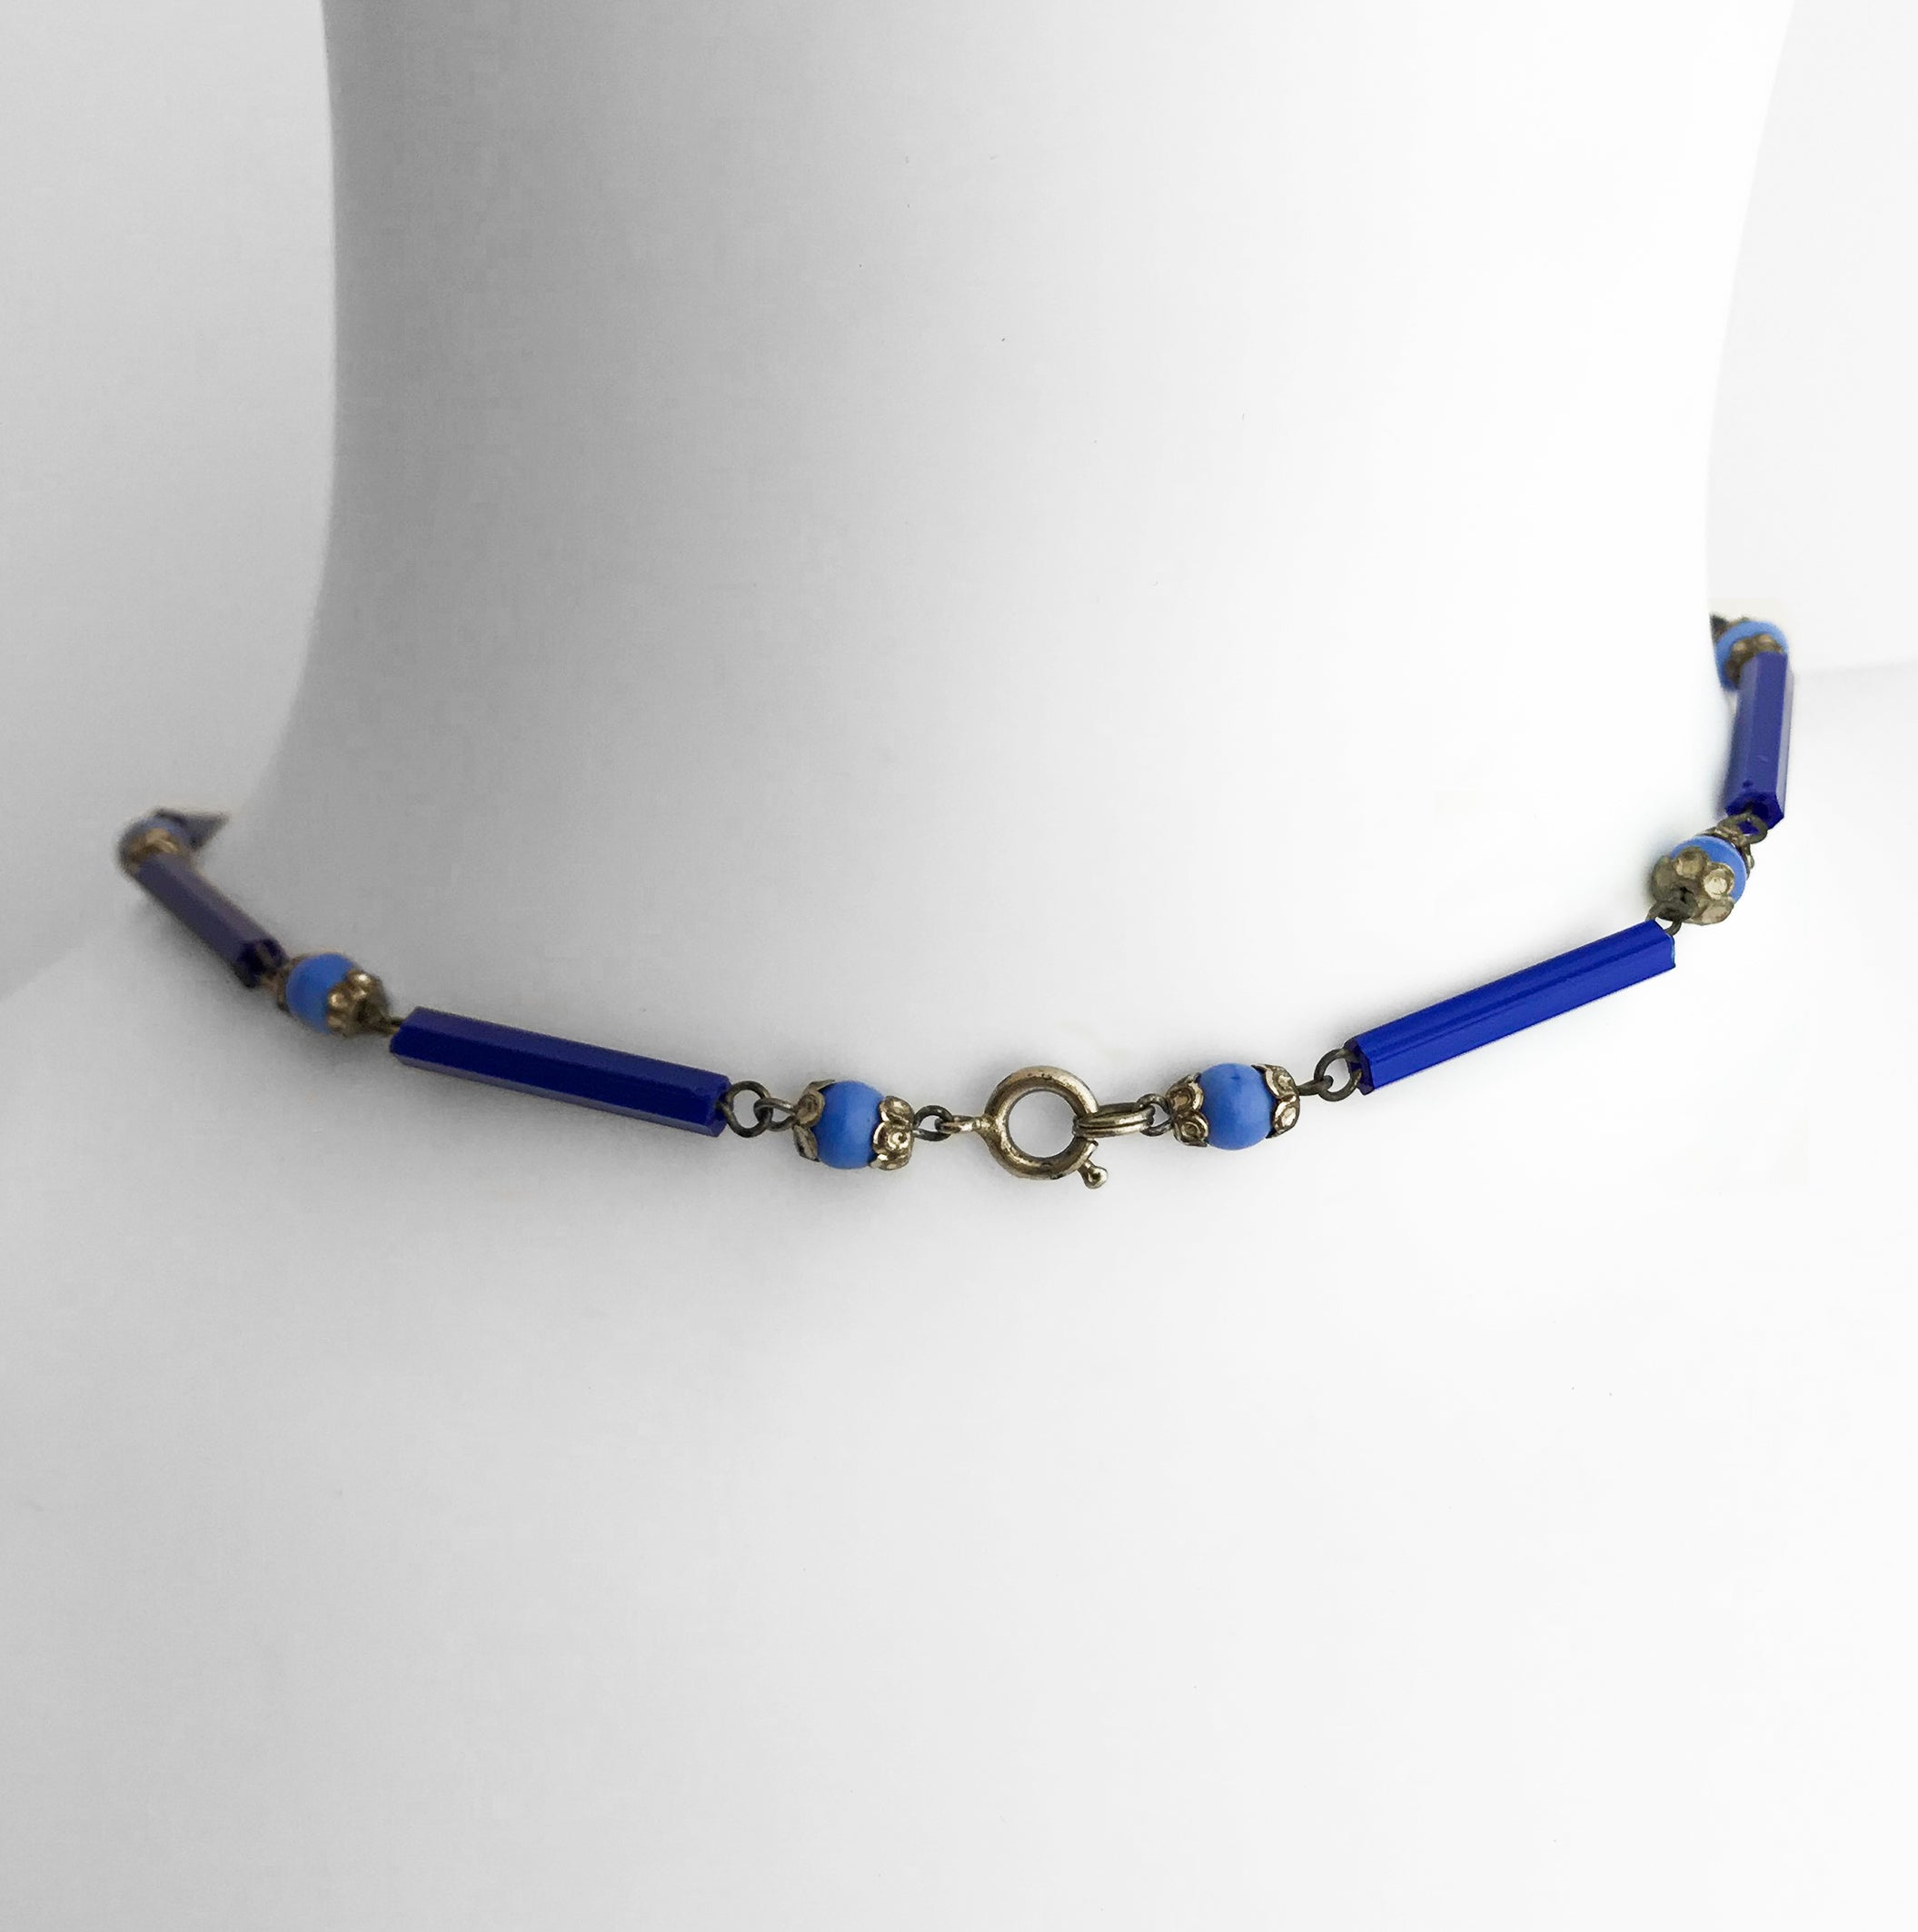 Vintage Blue and Black Geo-Metric Art Deco Necklace - SHOP NOW - www.intovintage.co.uk